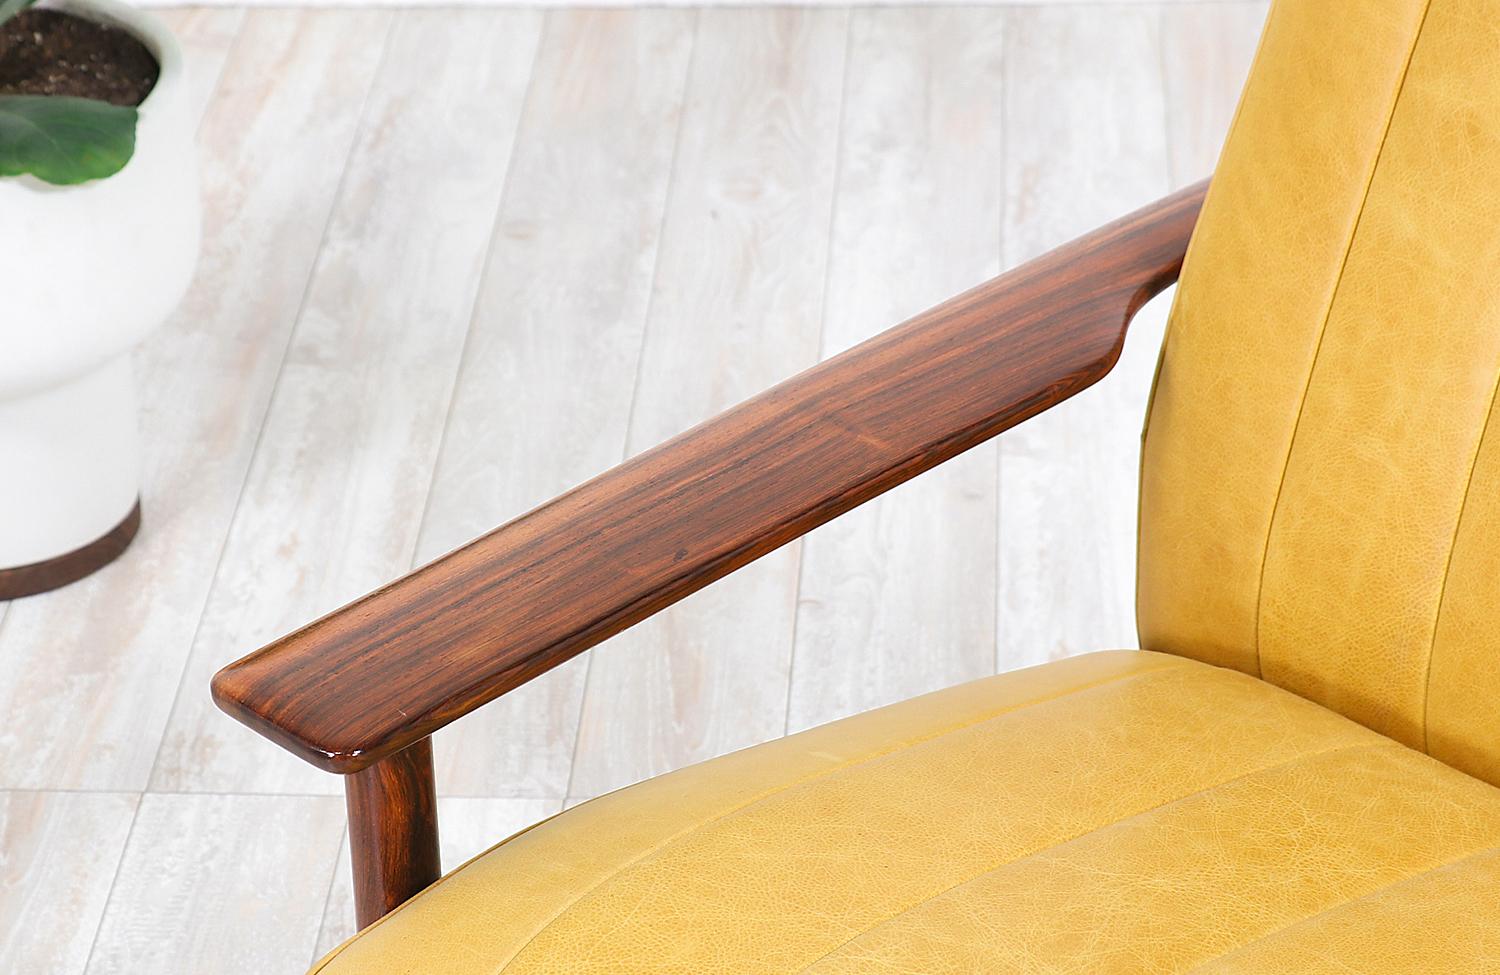 Sven Ivar Dysthe Model-1001 Rosewood and Leather Lounge Chair for Dokka Møbler 1